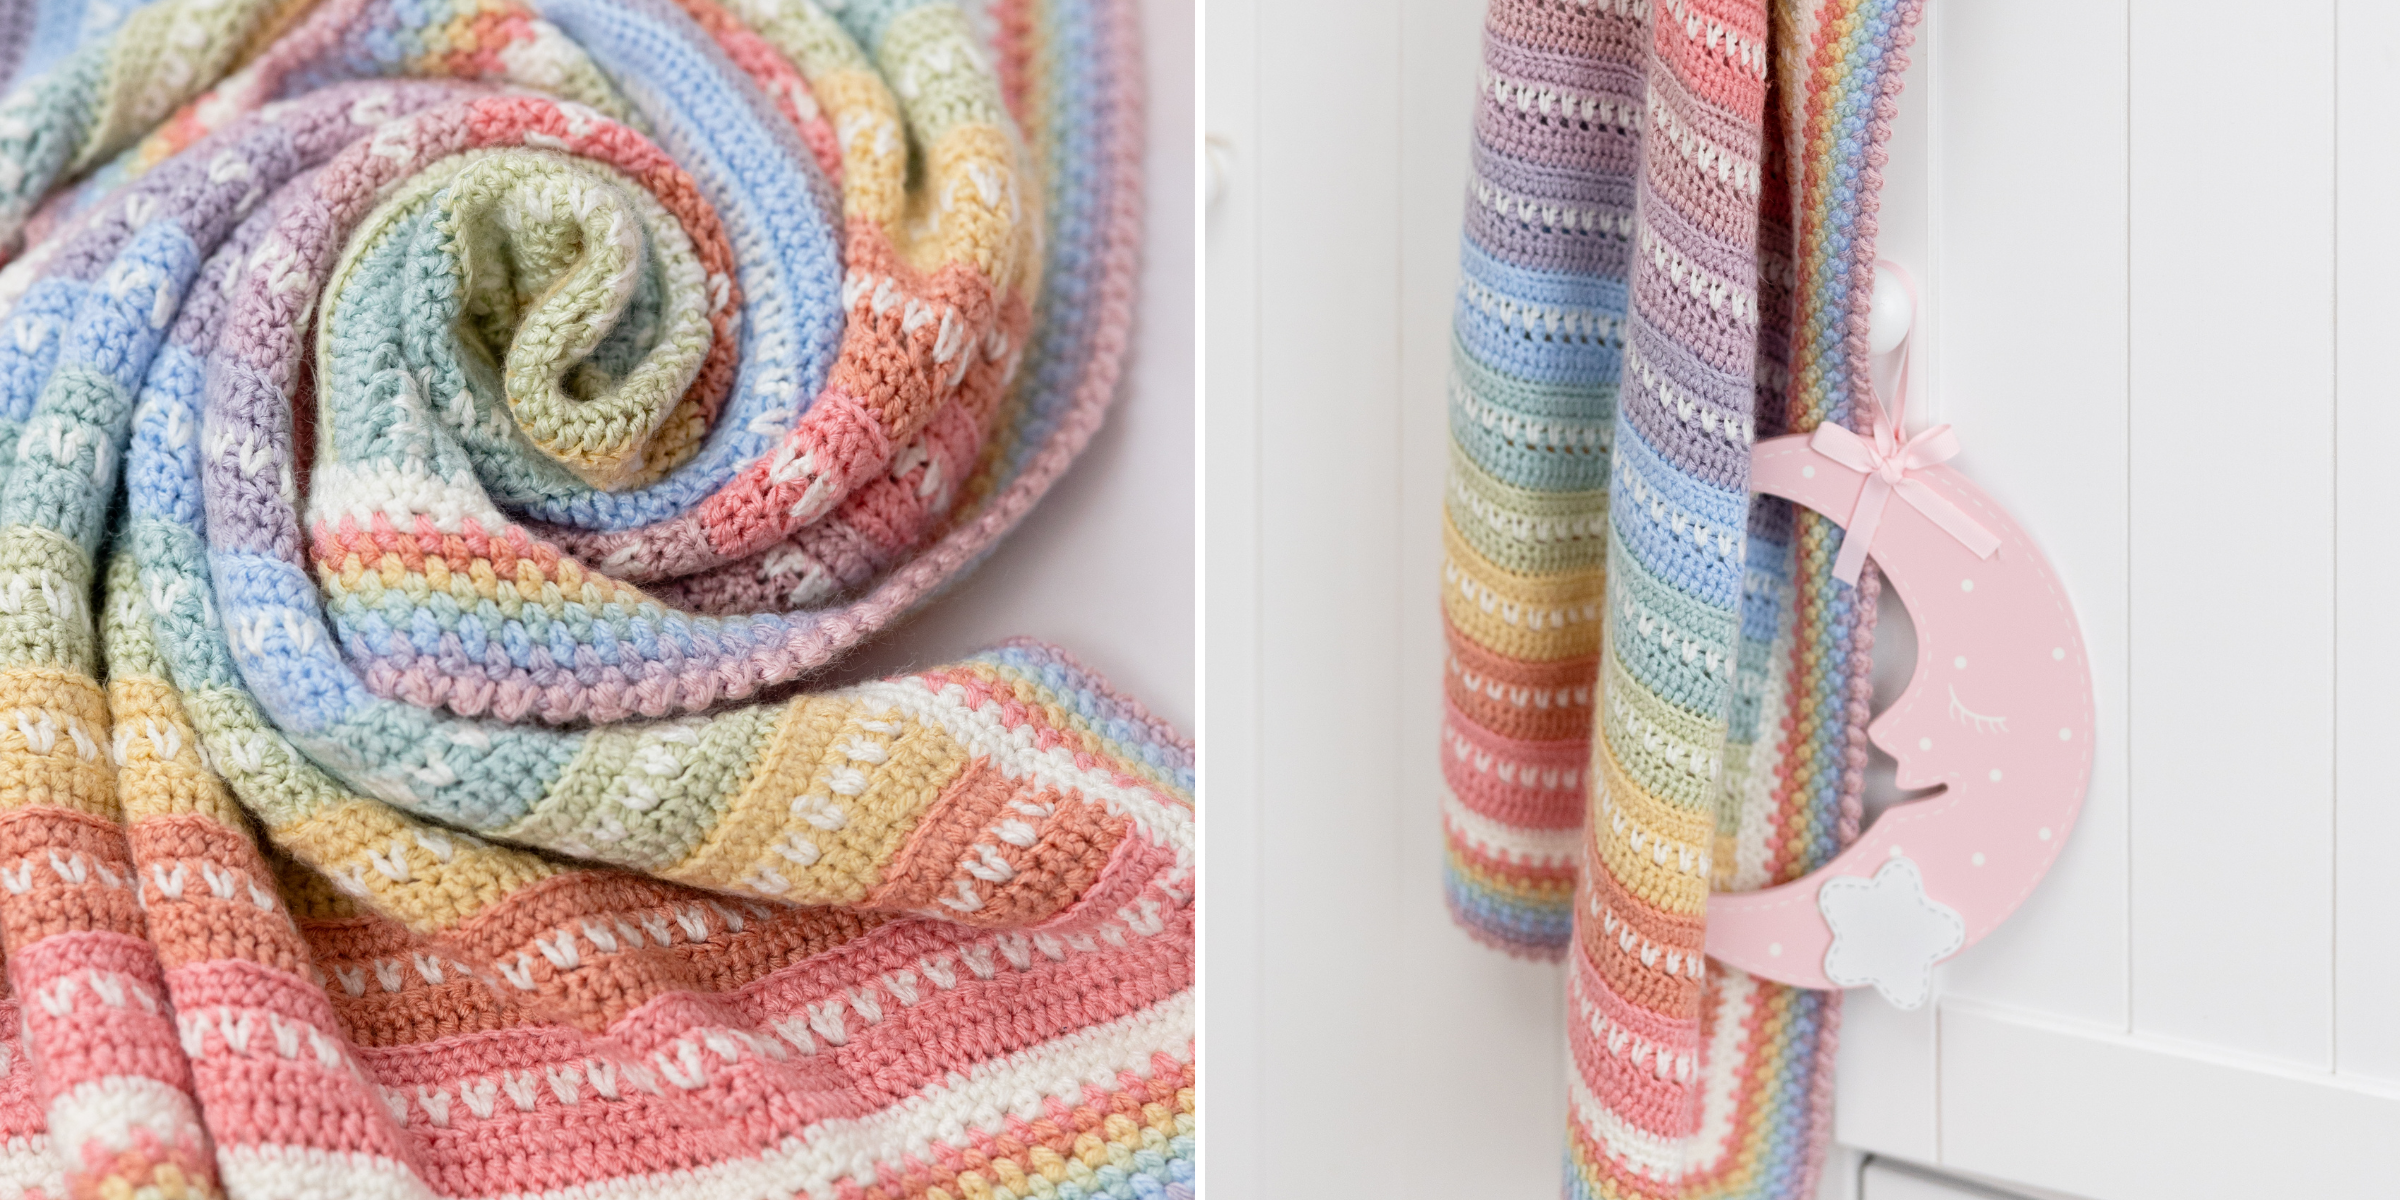 Crochet Kits  The Knitting Network